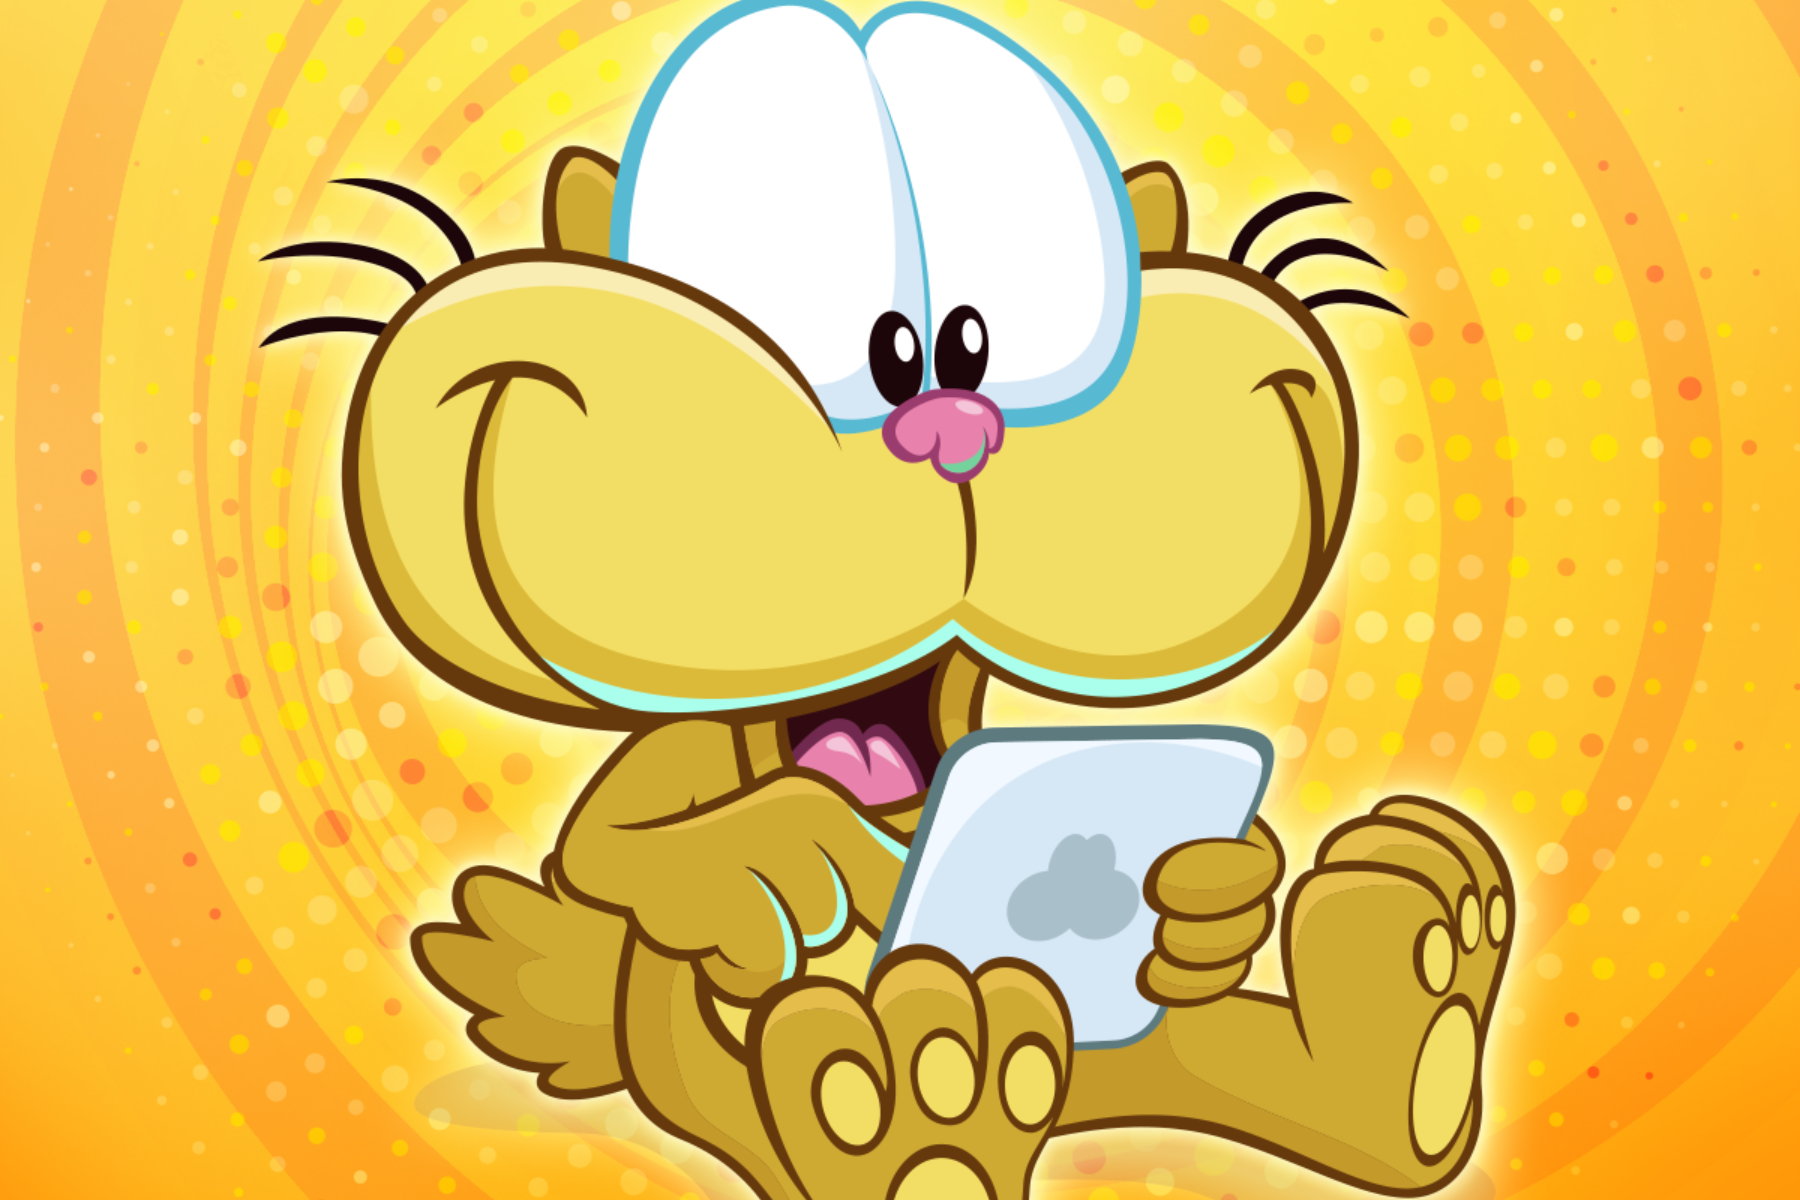 Garfield is scrolling a tablet